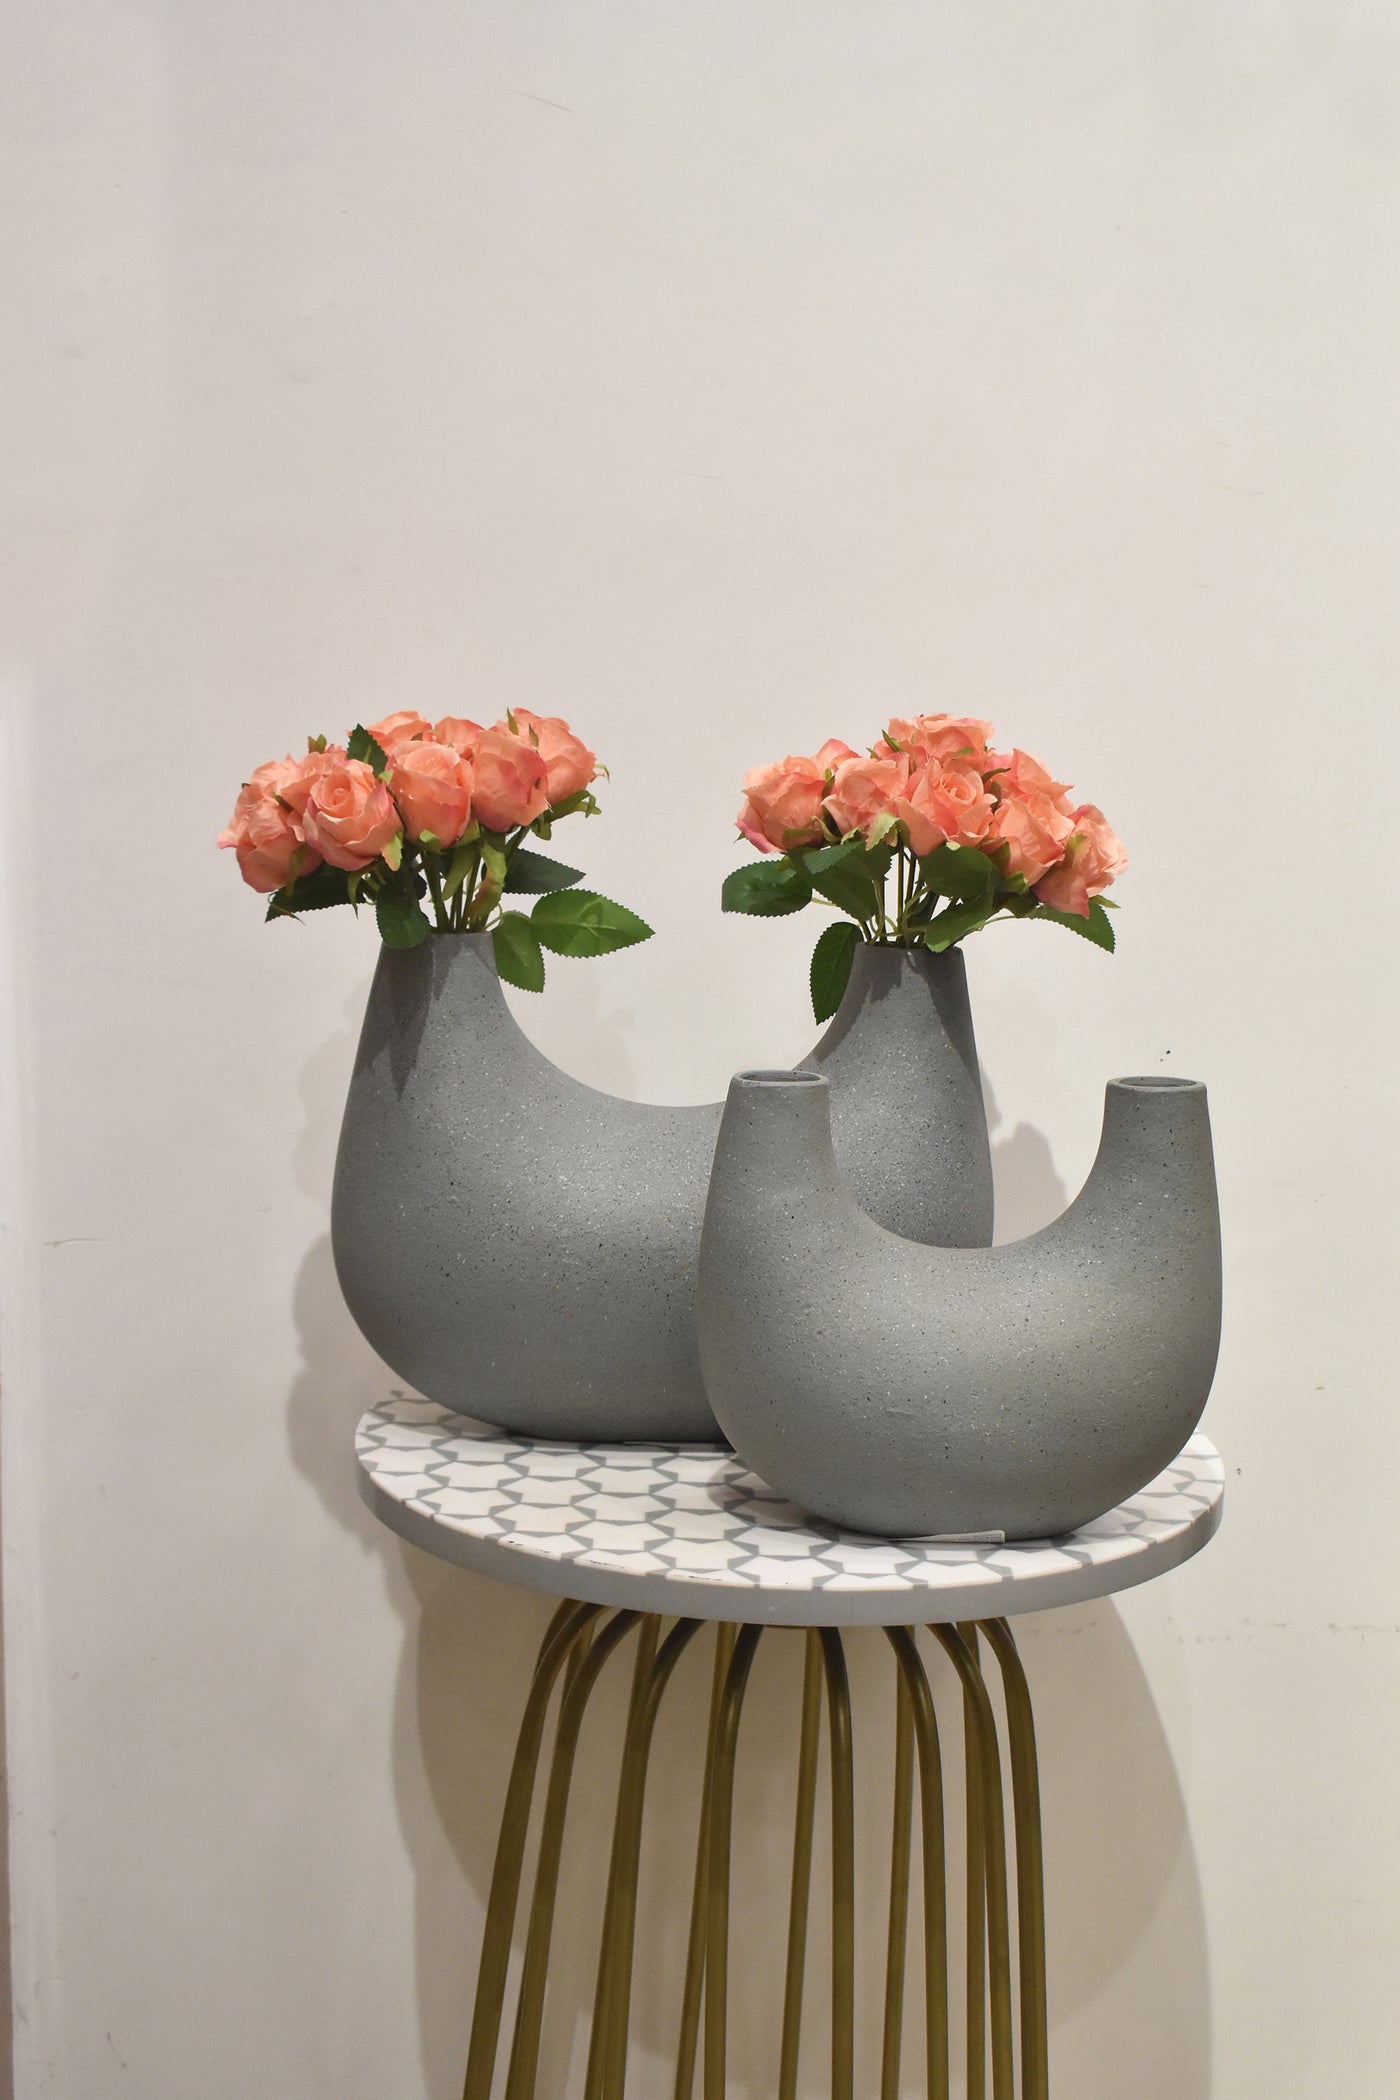 U Shaped Nordic Ceramic Vase Half Donut for your home or office decor-Large